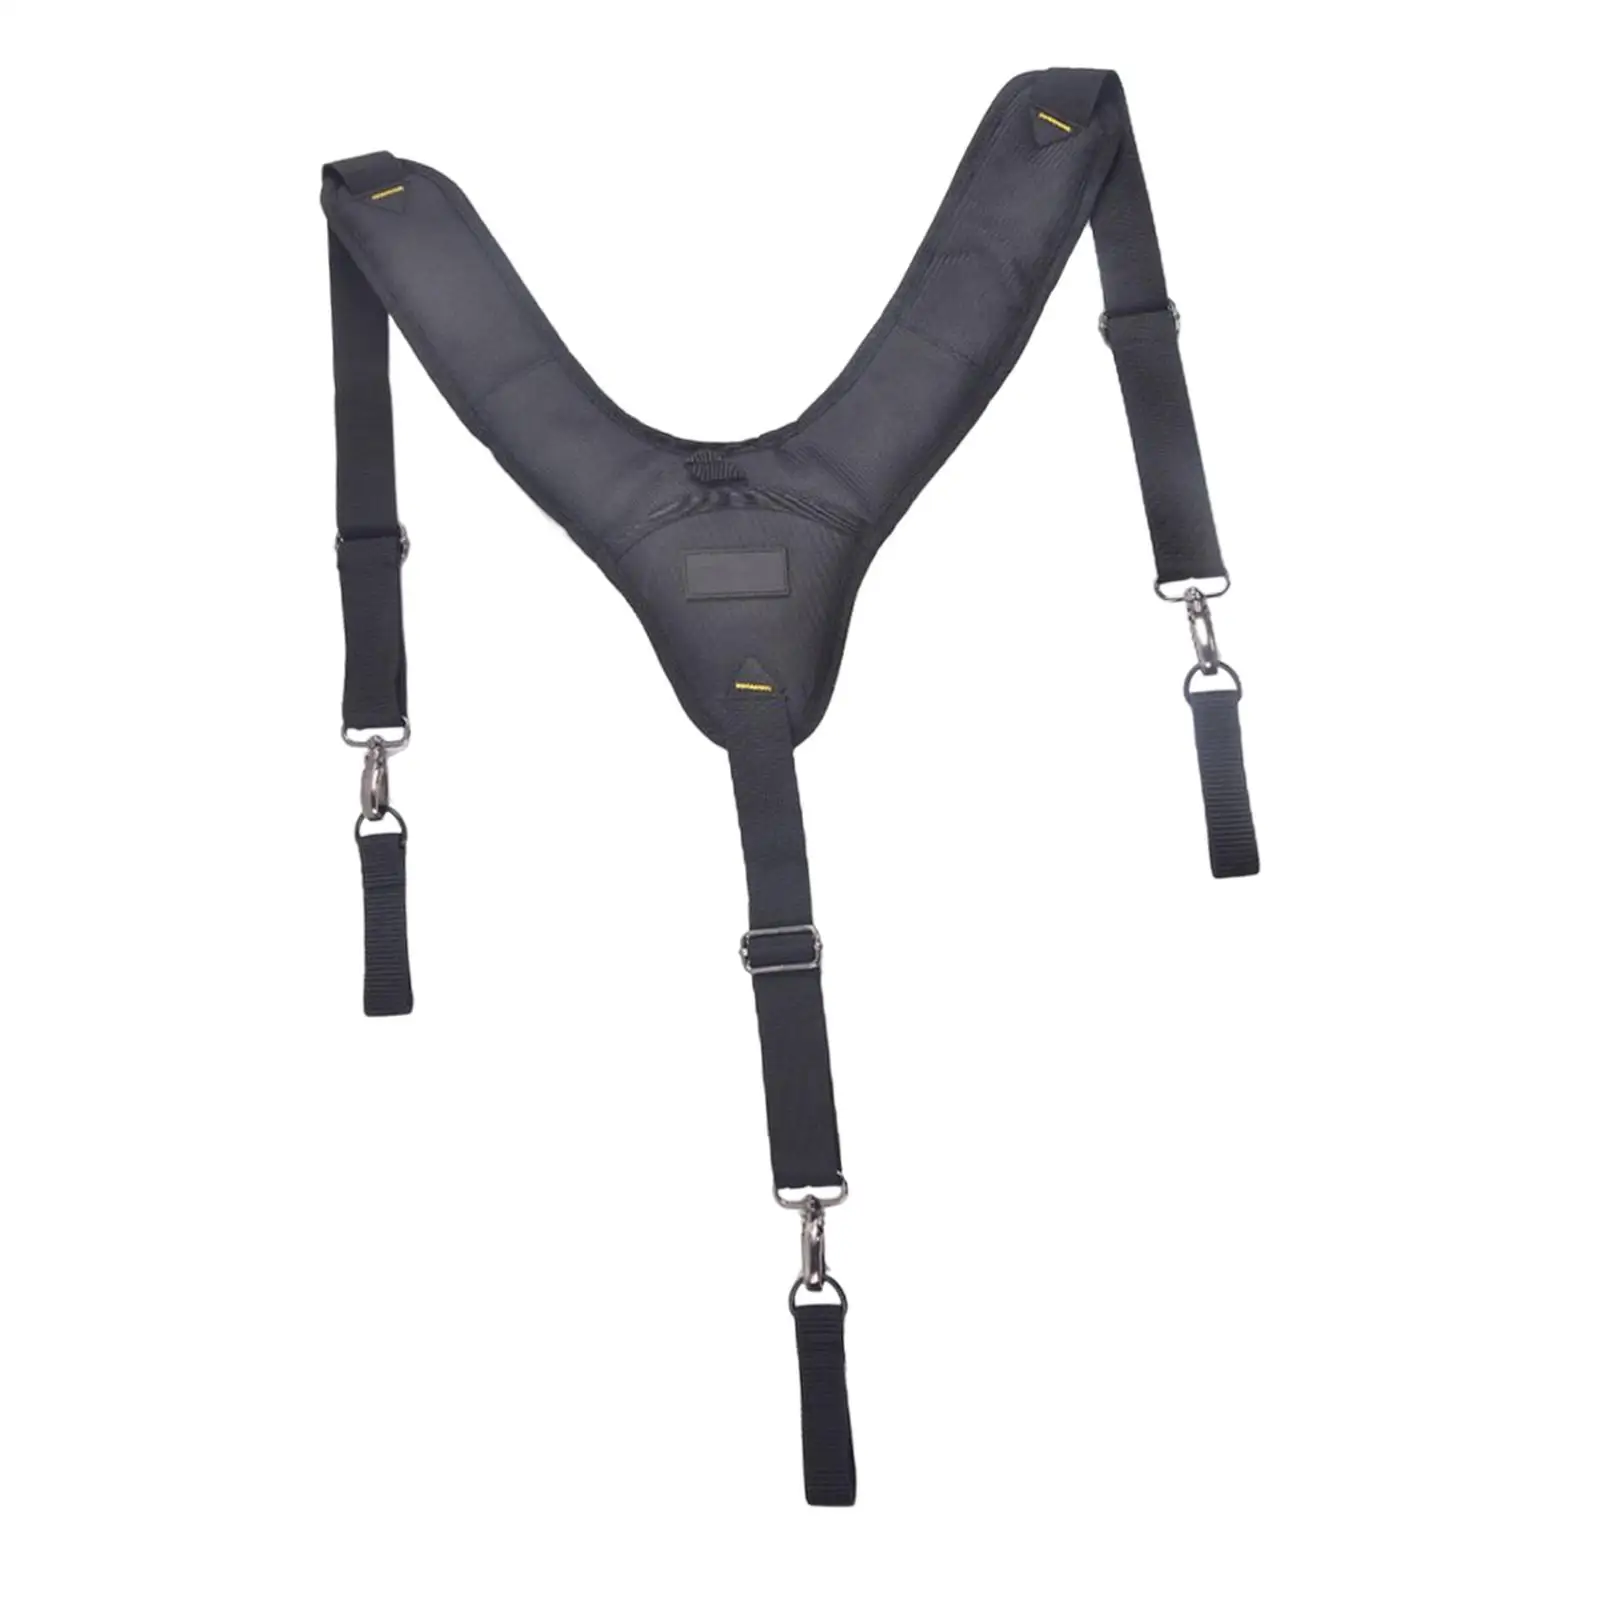 Work Suspenders Black Construction Tools Adjustable Shoulder Straps Classic Tool Belt Suspenders for Men Electrician Maintenance